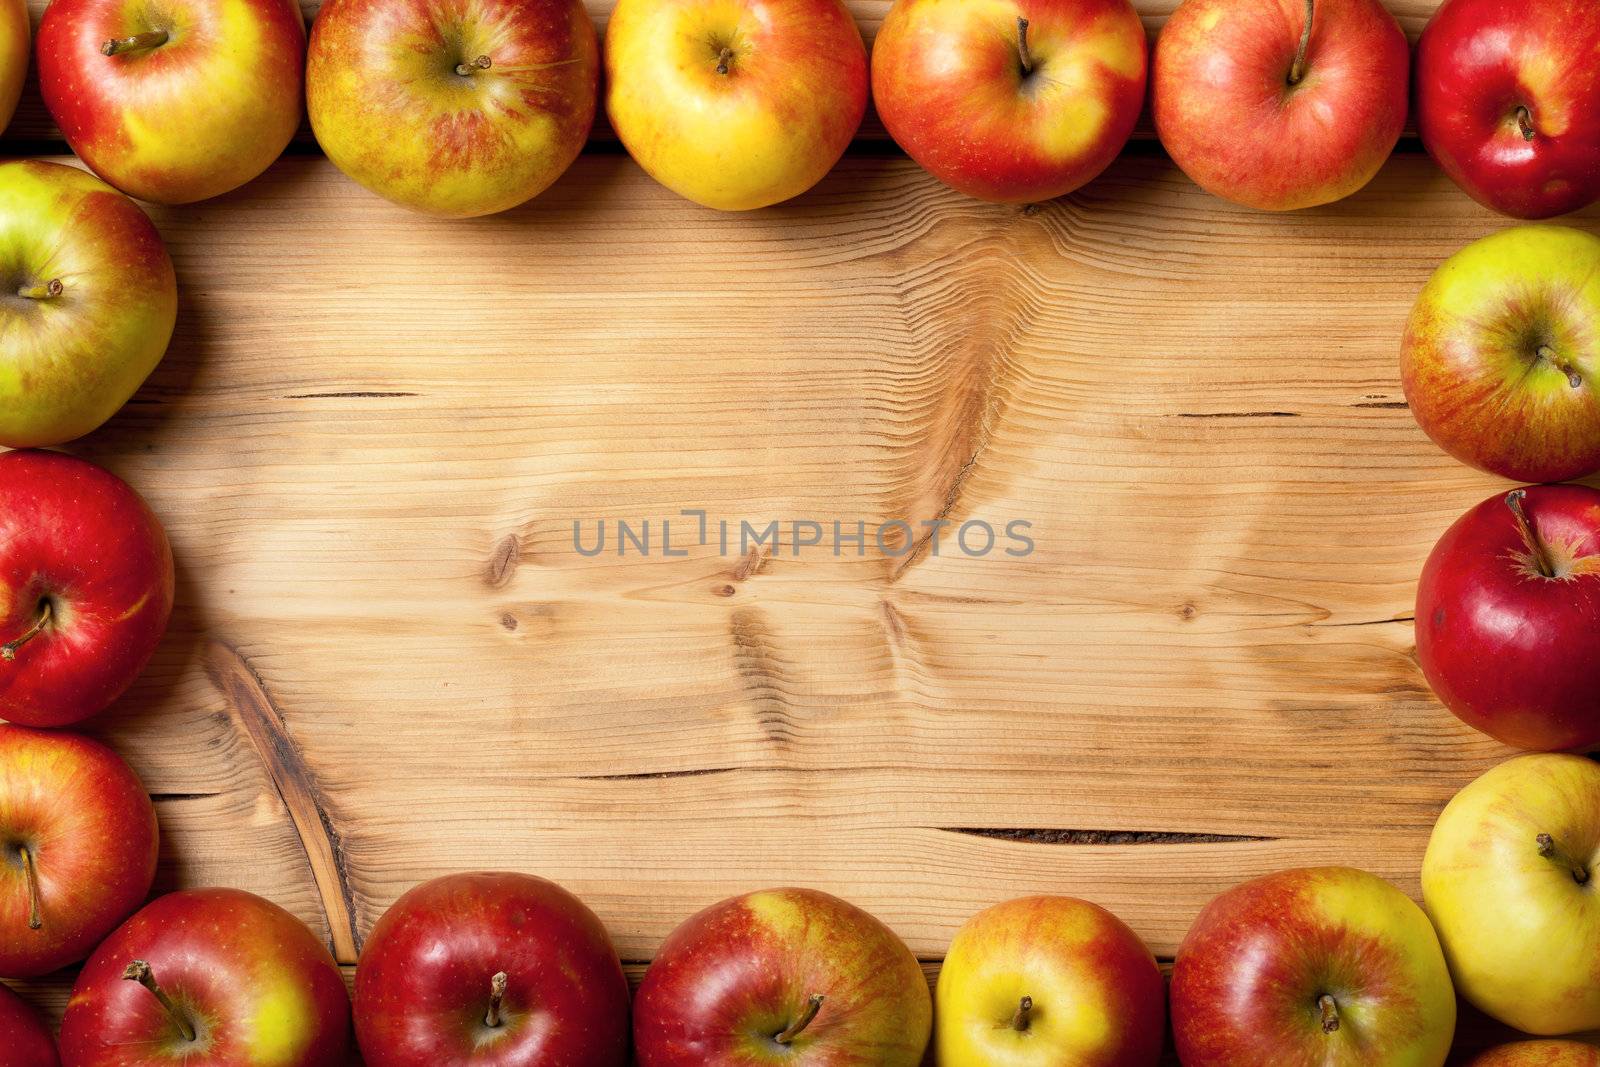 Apples by bozena_fulawka